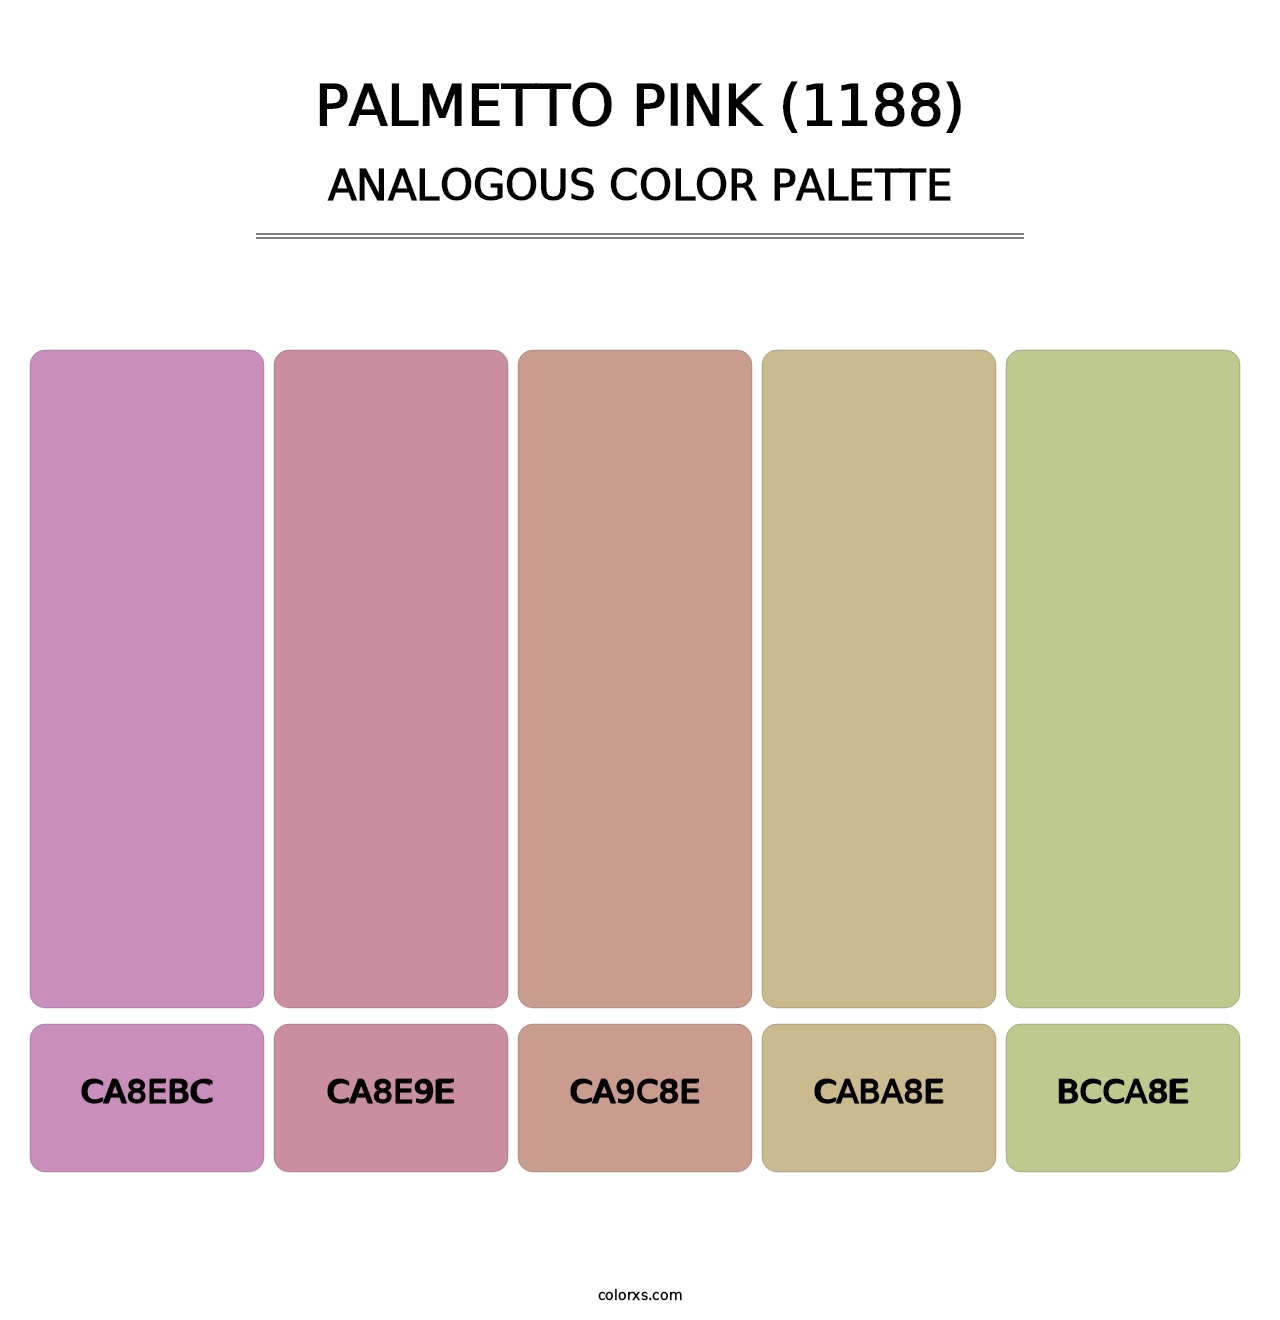 Palmetto Pink (1188) - Analogous Color Palette